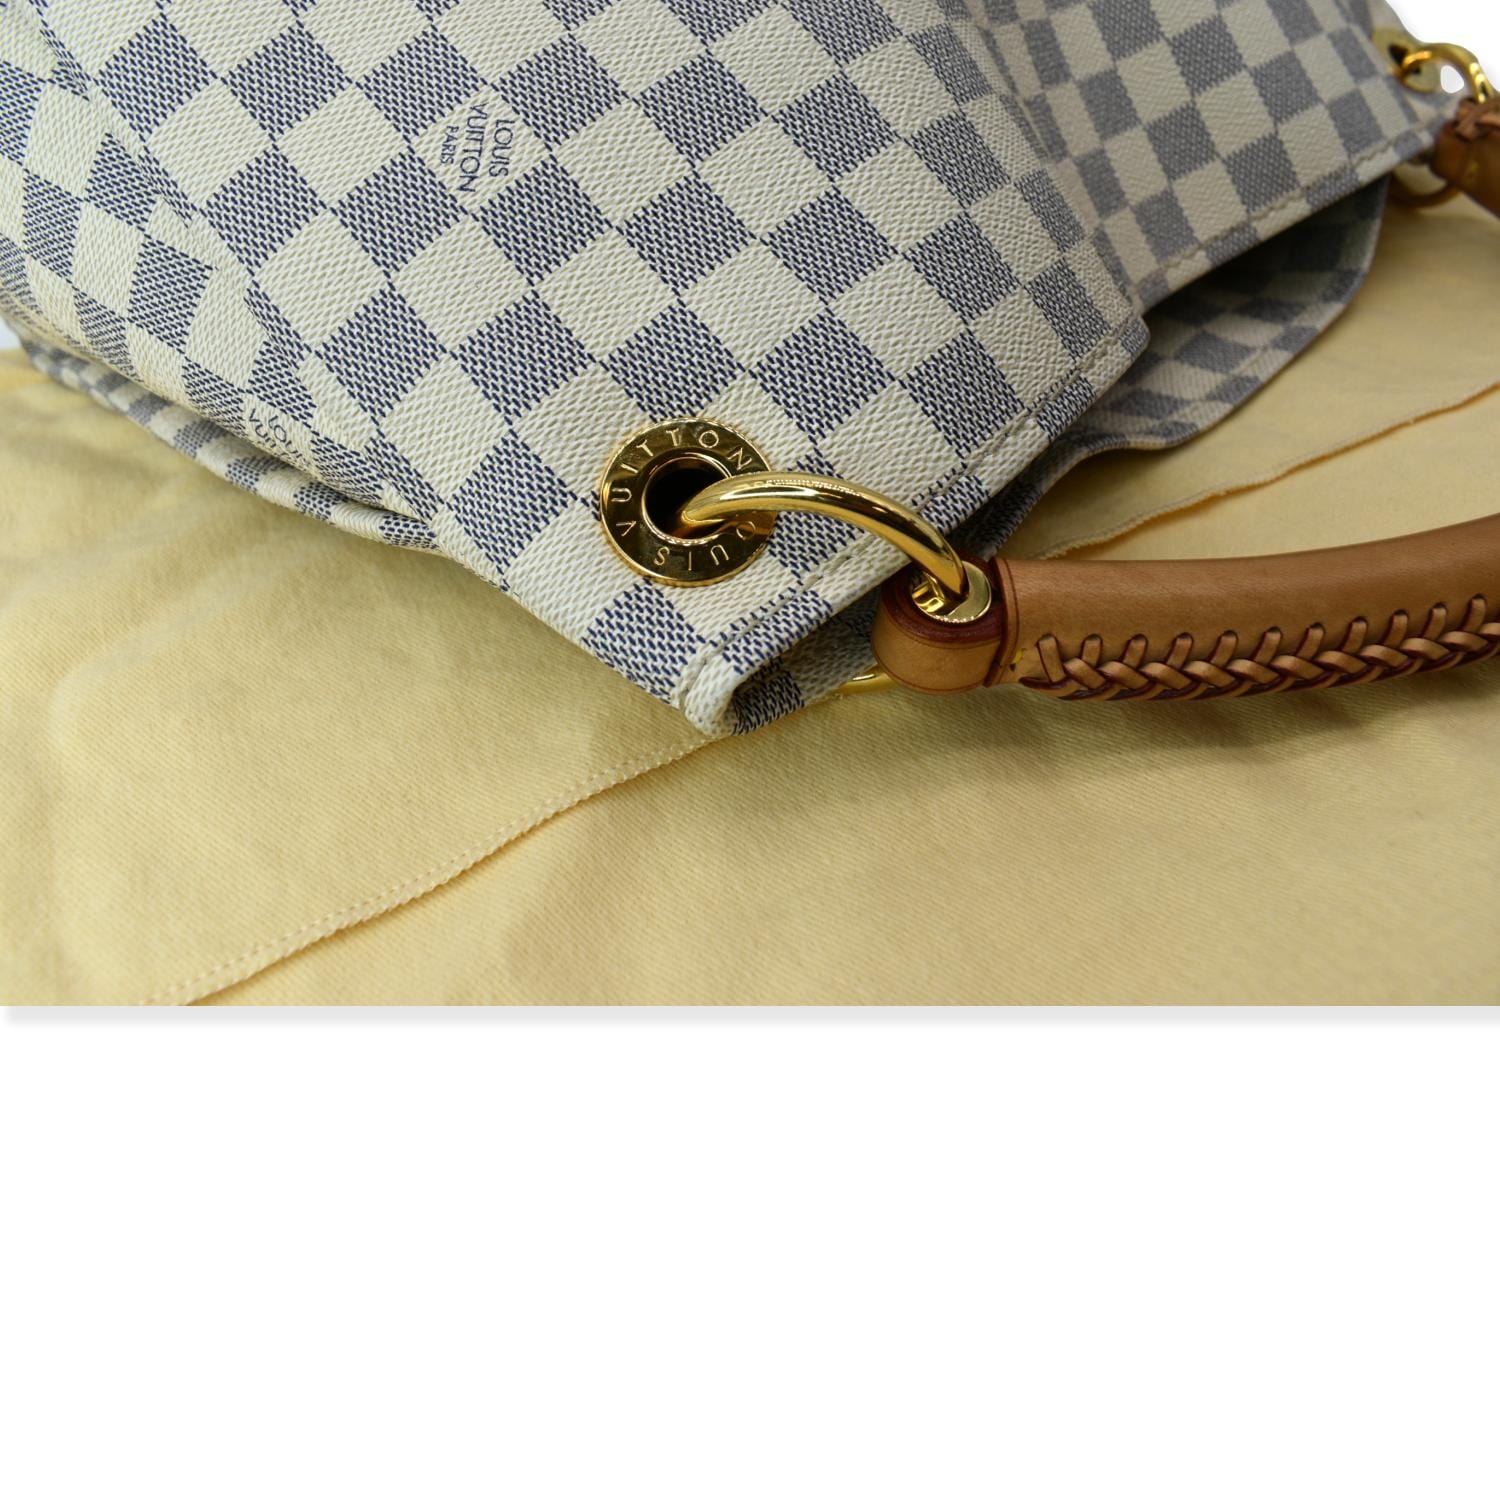 Louis Vuitton Damier Azur Artsy MM - Neutrals Hobos, Handbags